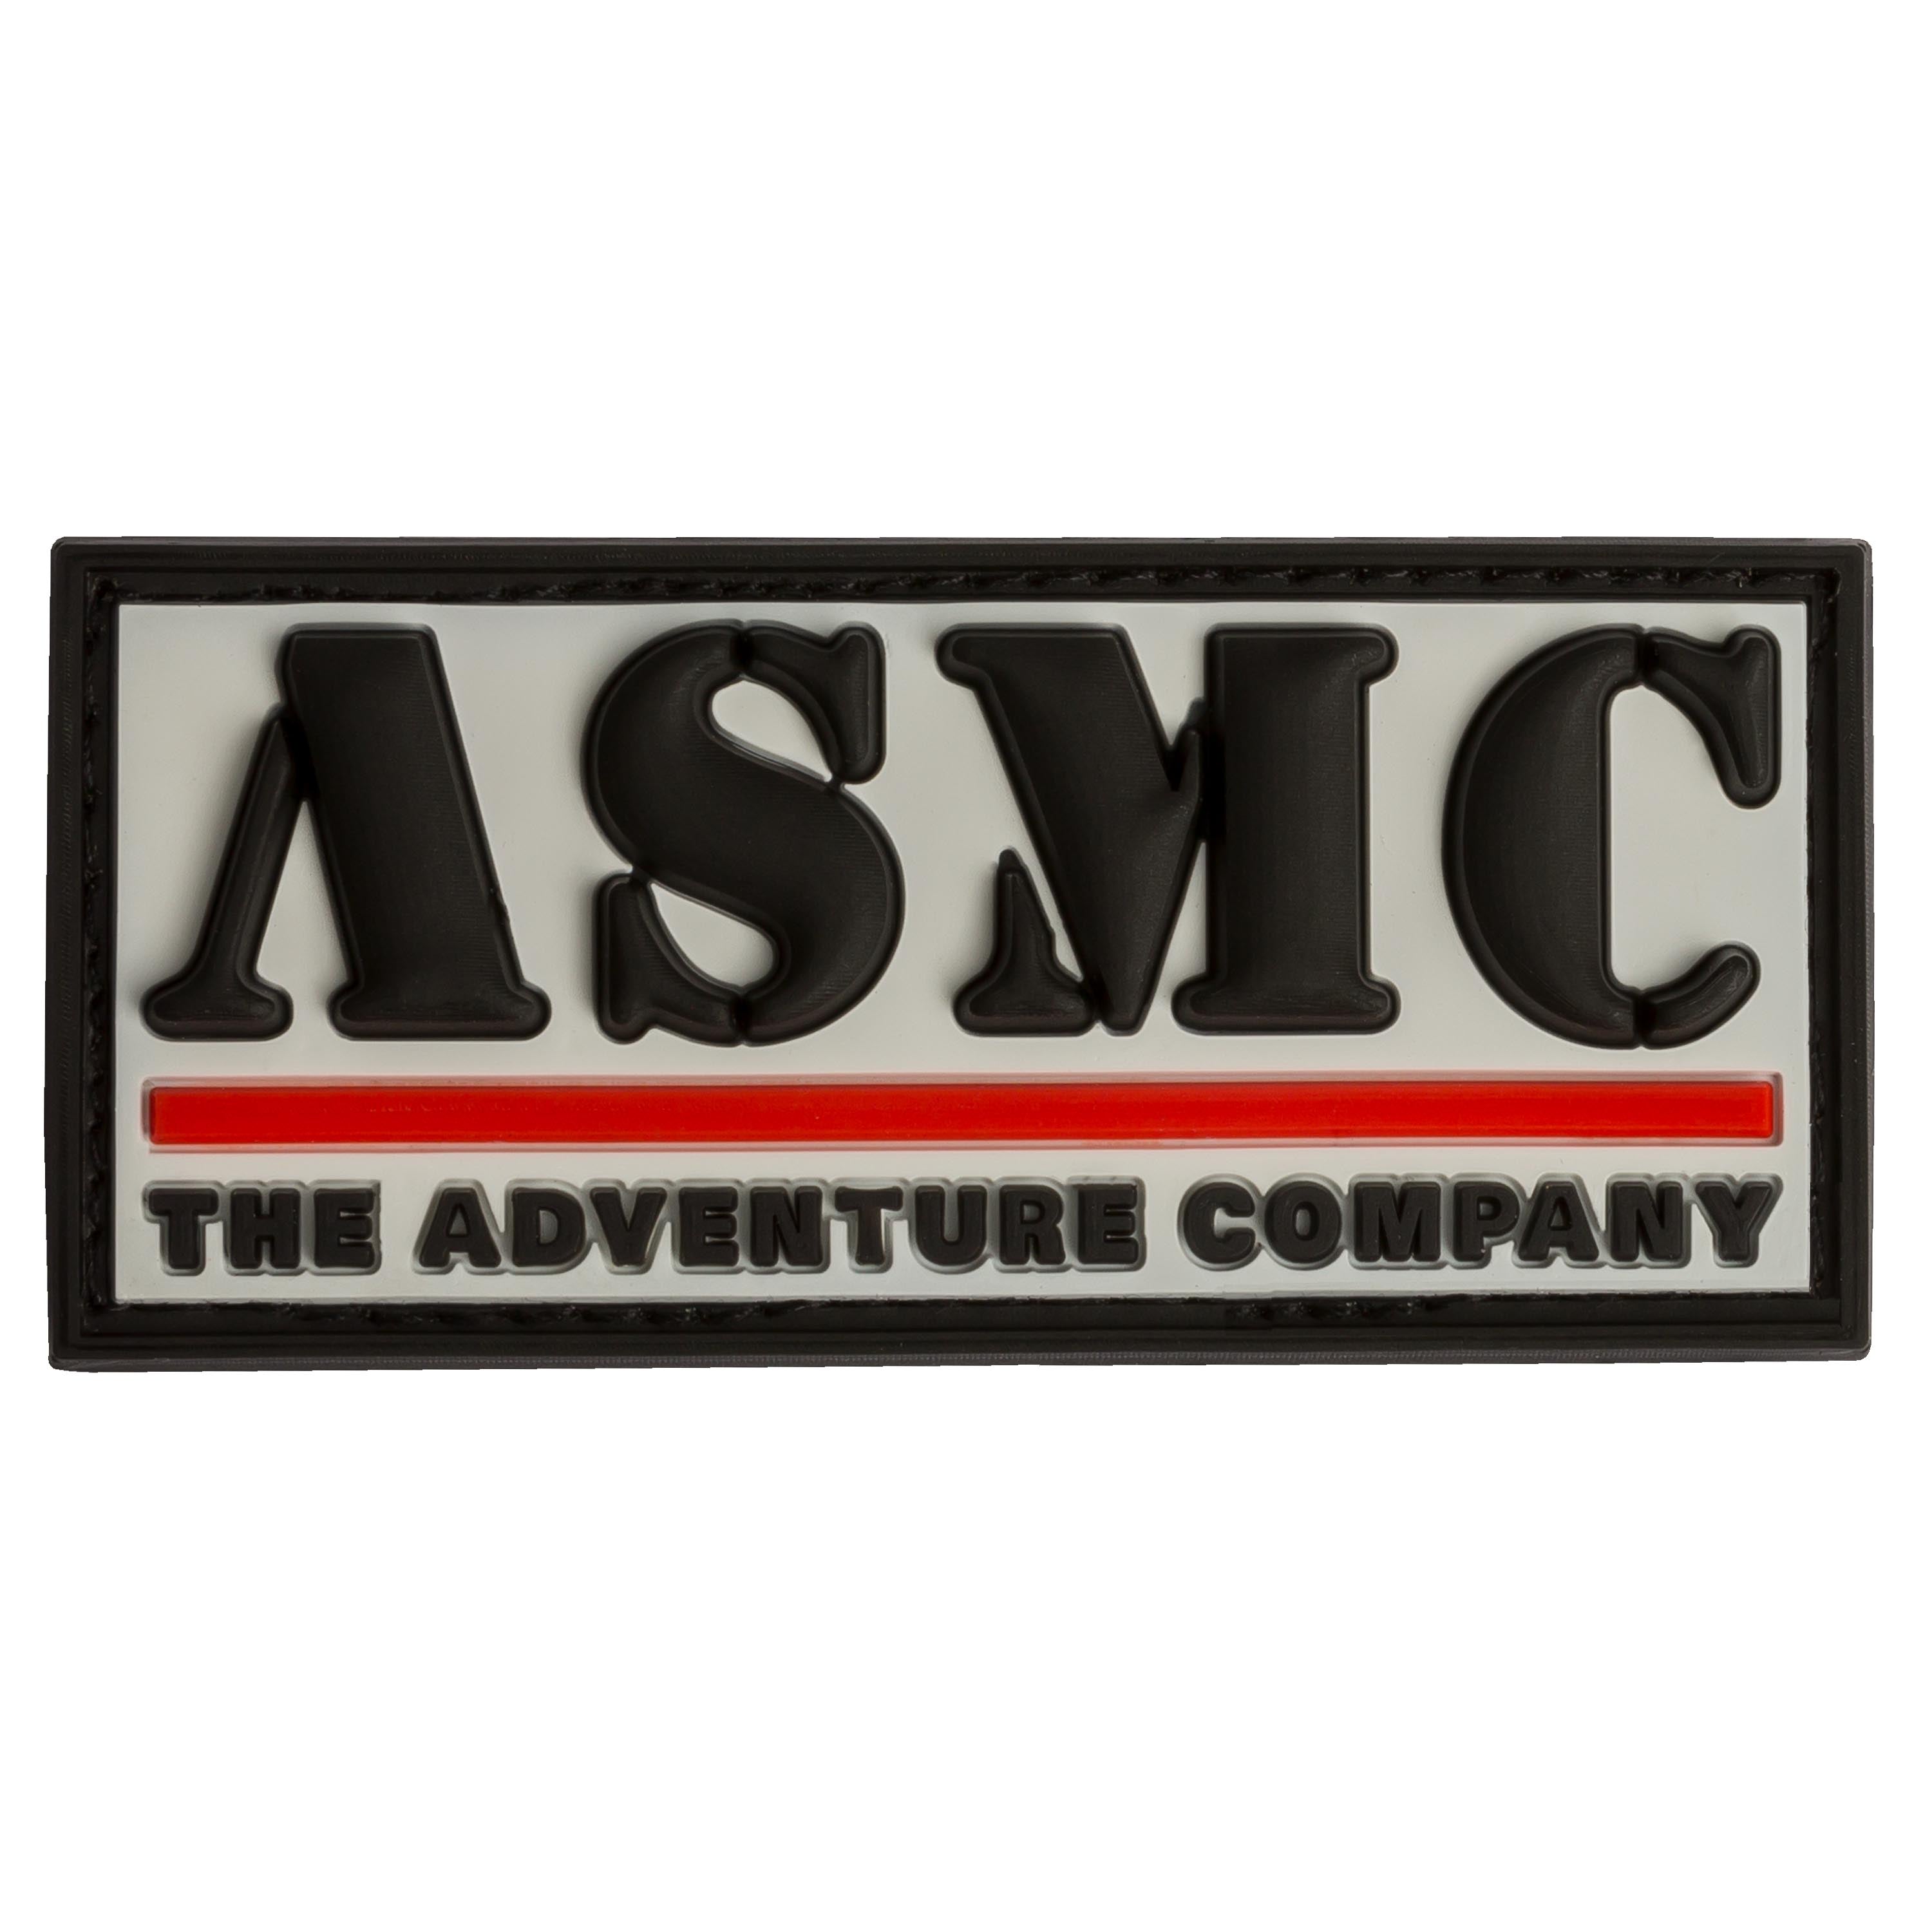 ASMC GmbH